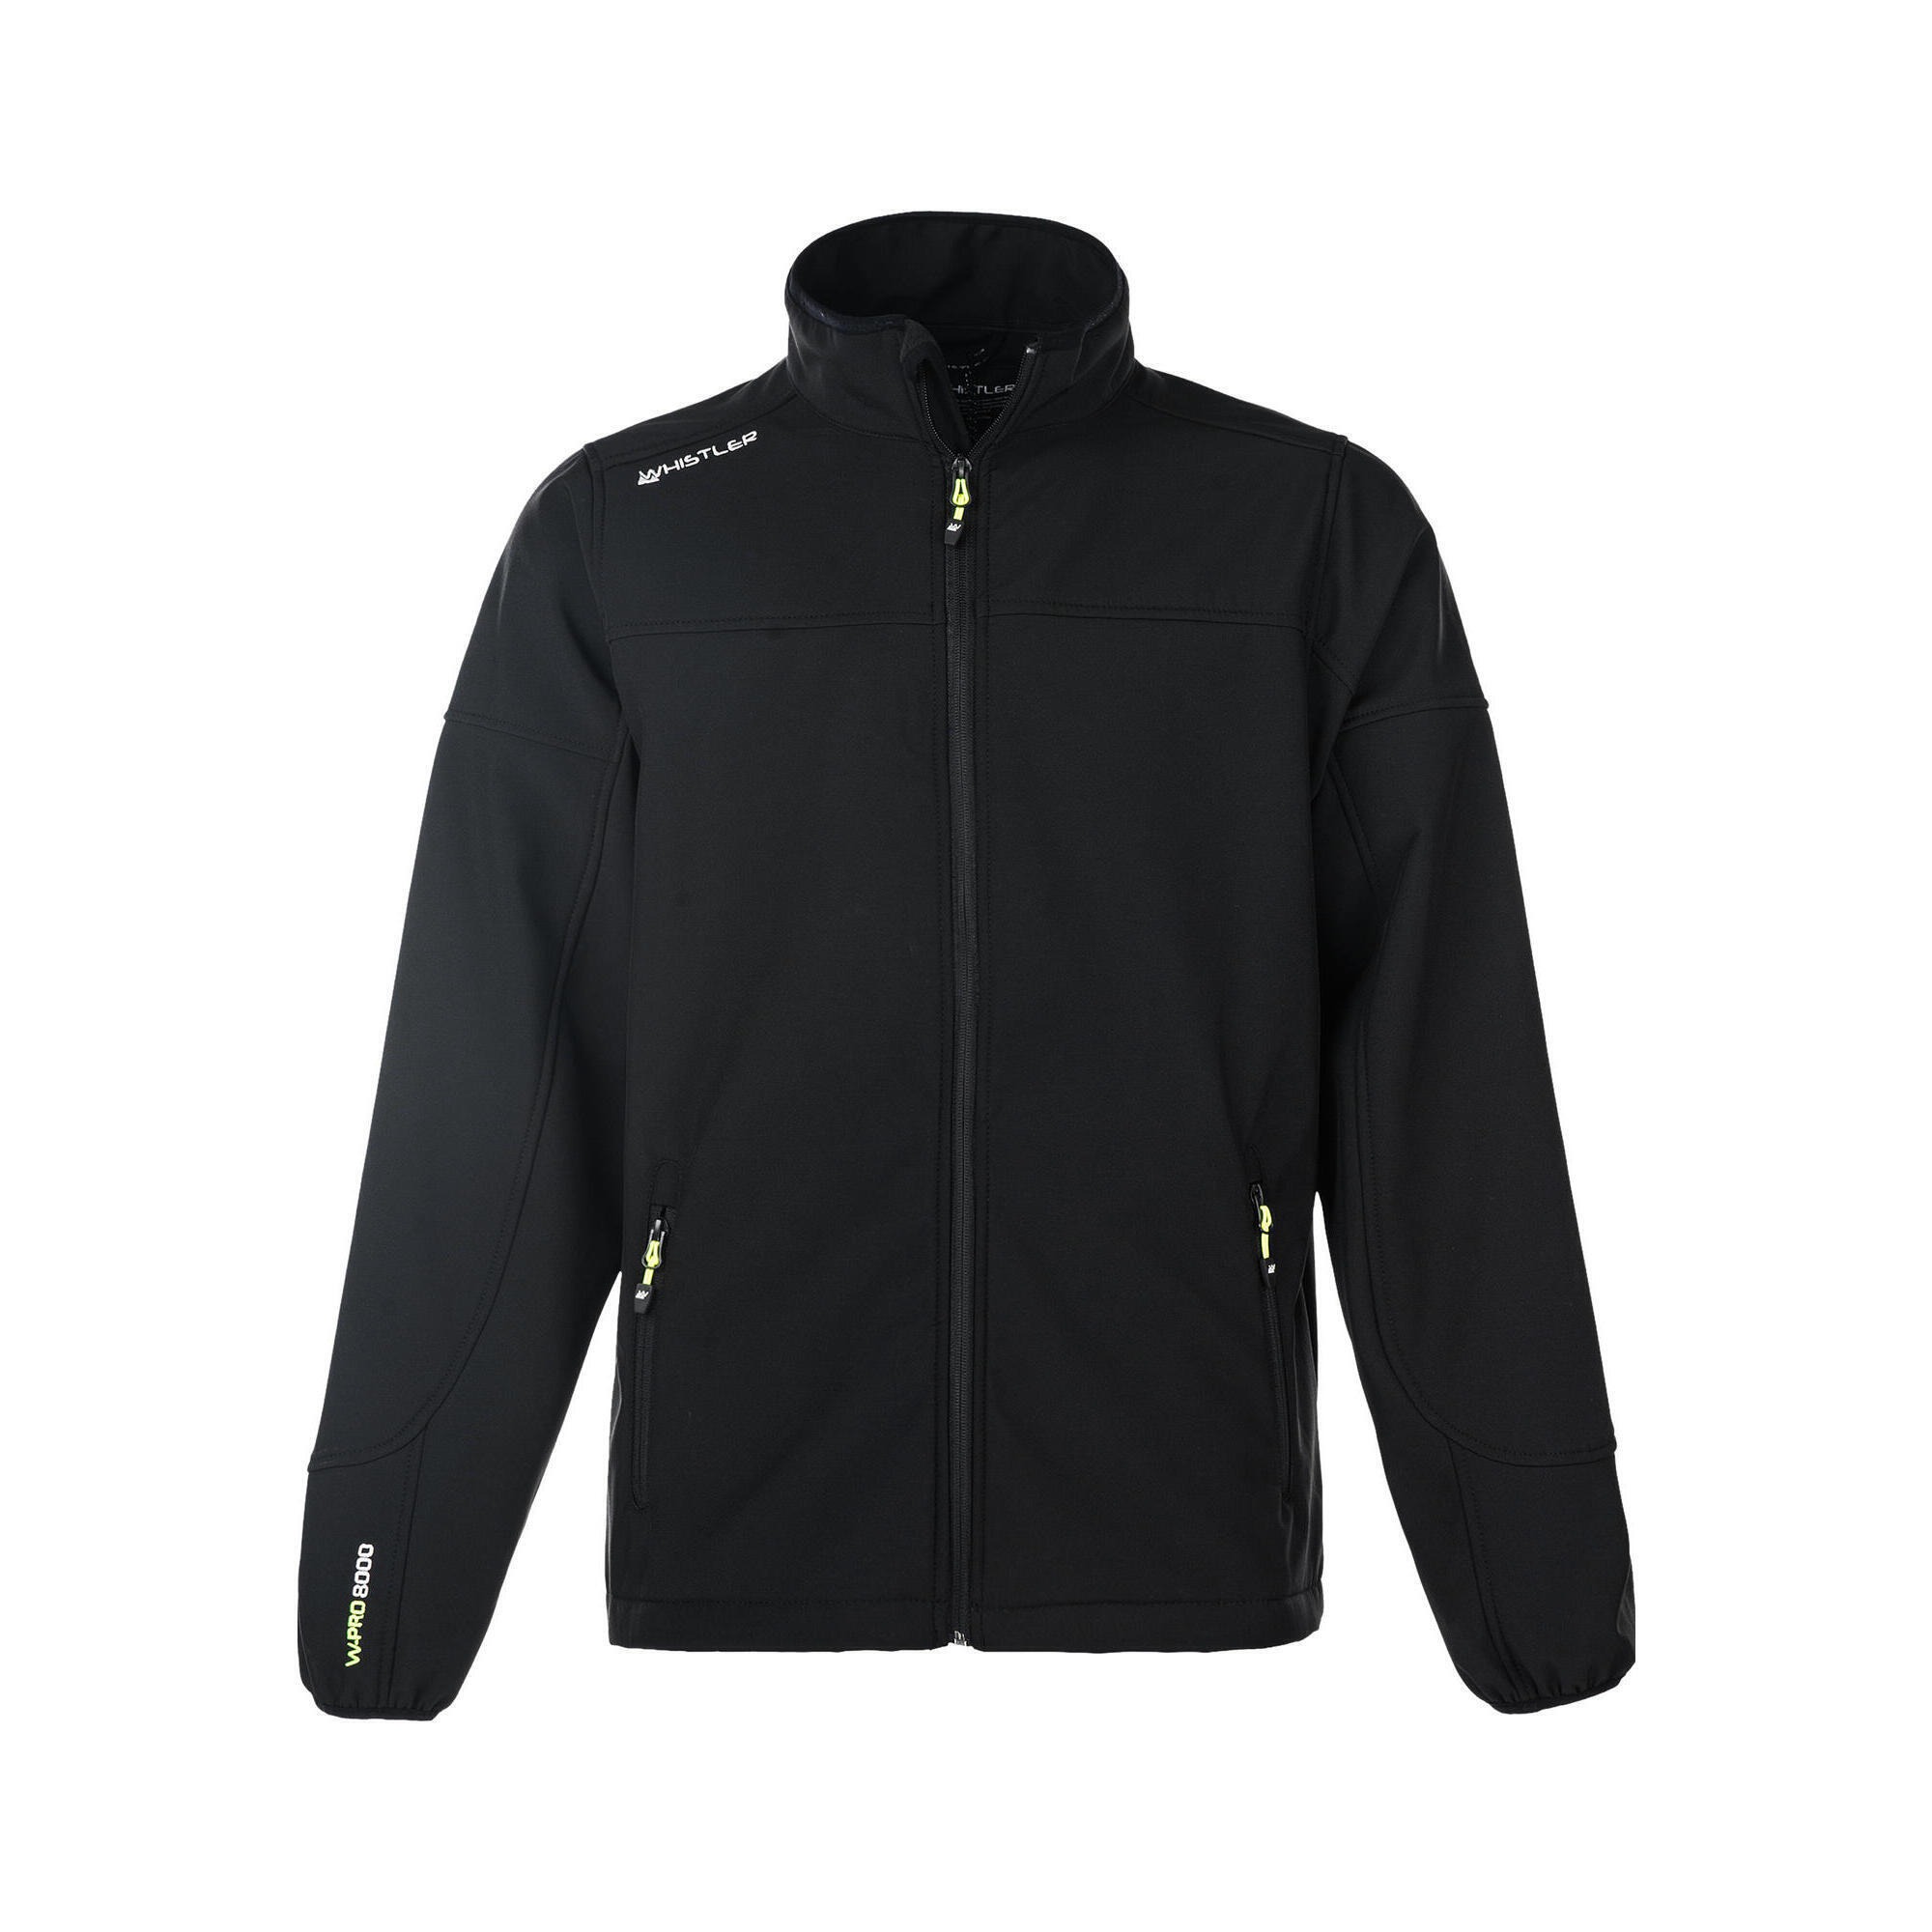 цена Куртка Whistler Dublin для походов мужская водонепроницаемая 8000 мм, черный